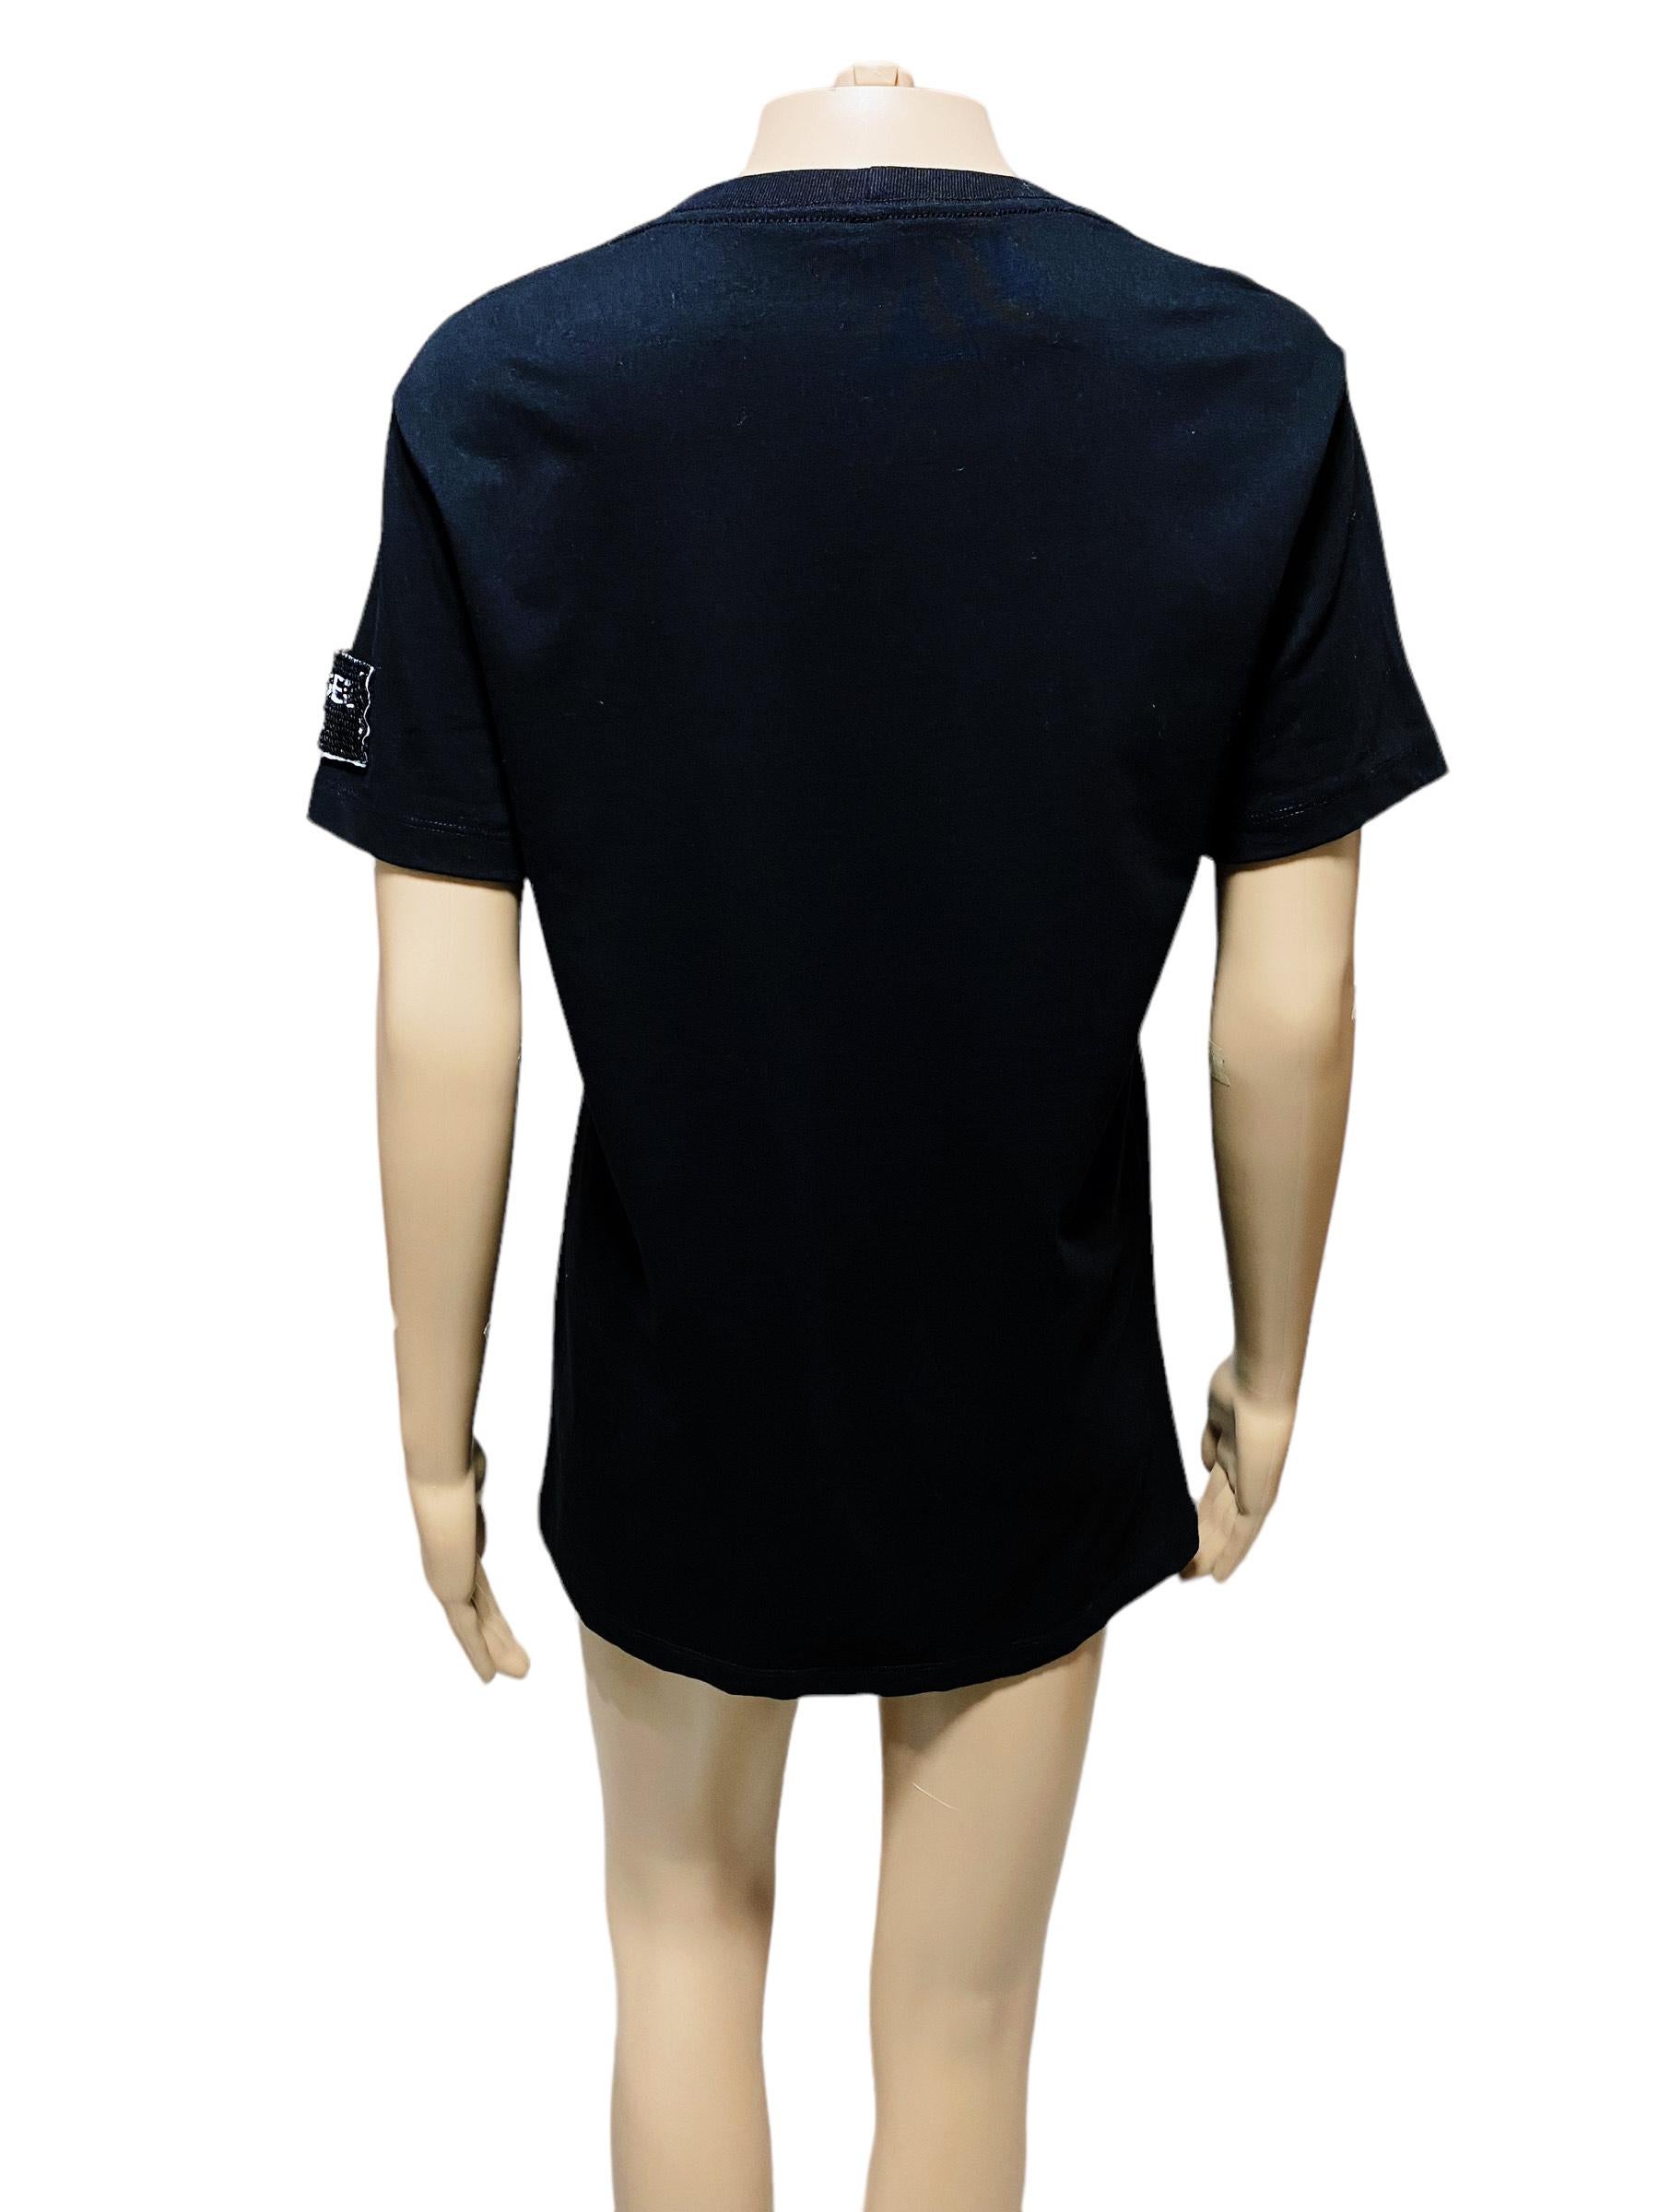 Chanel Black T-Shirt - Chanel Cruise 2021-22 3